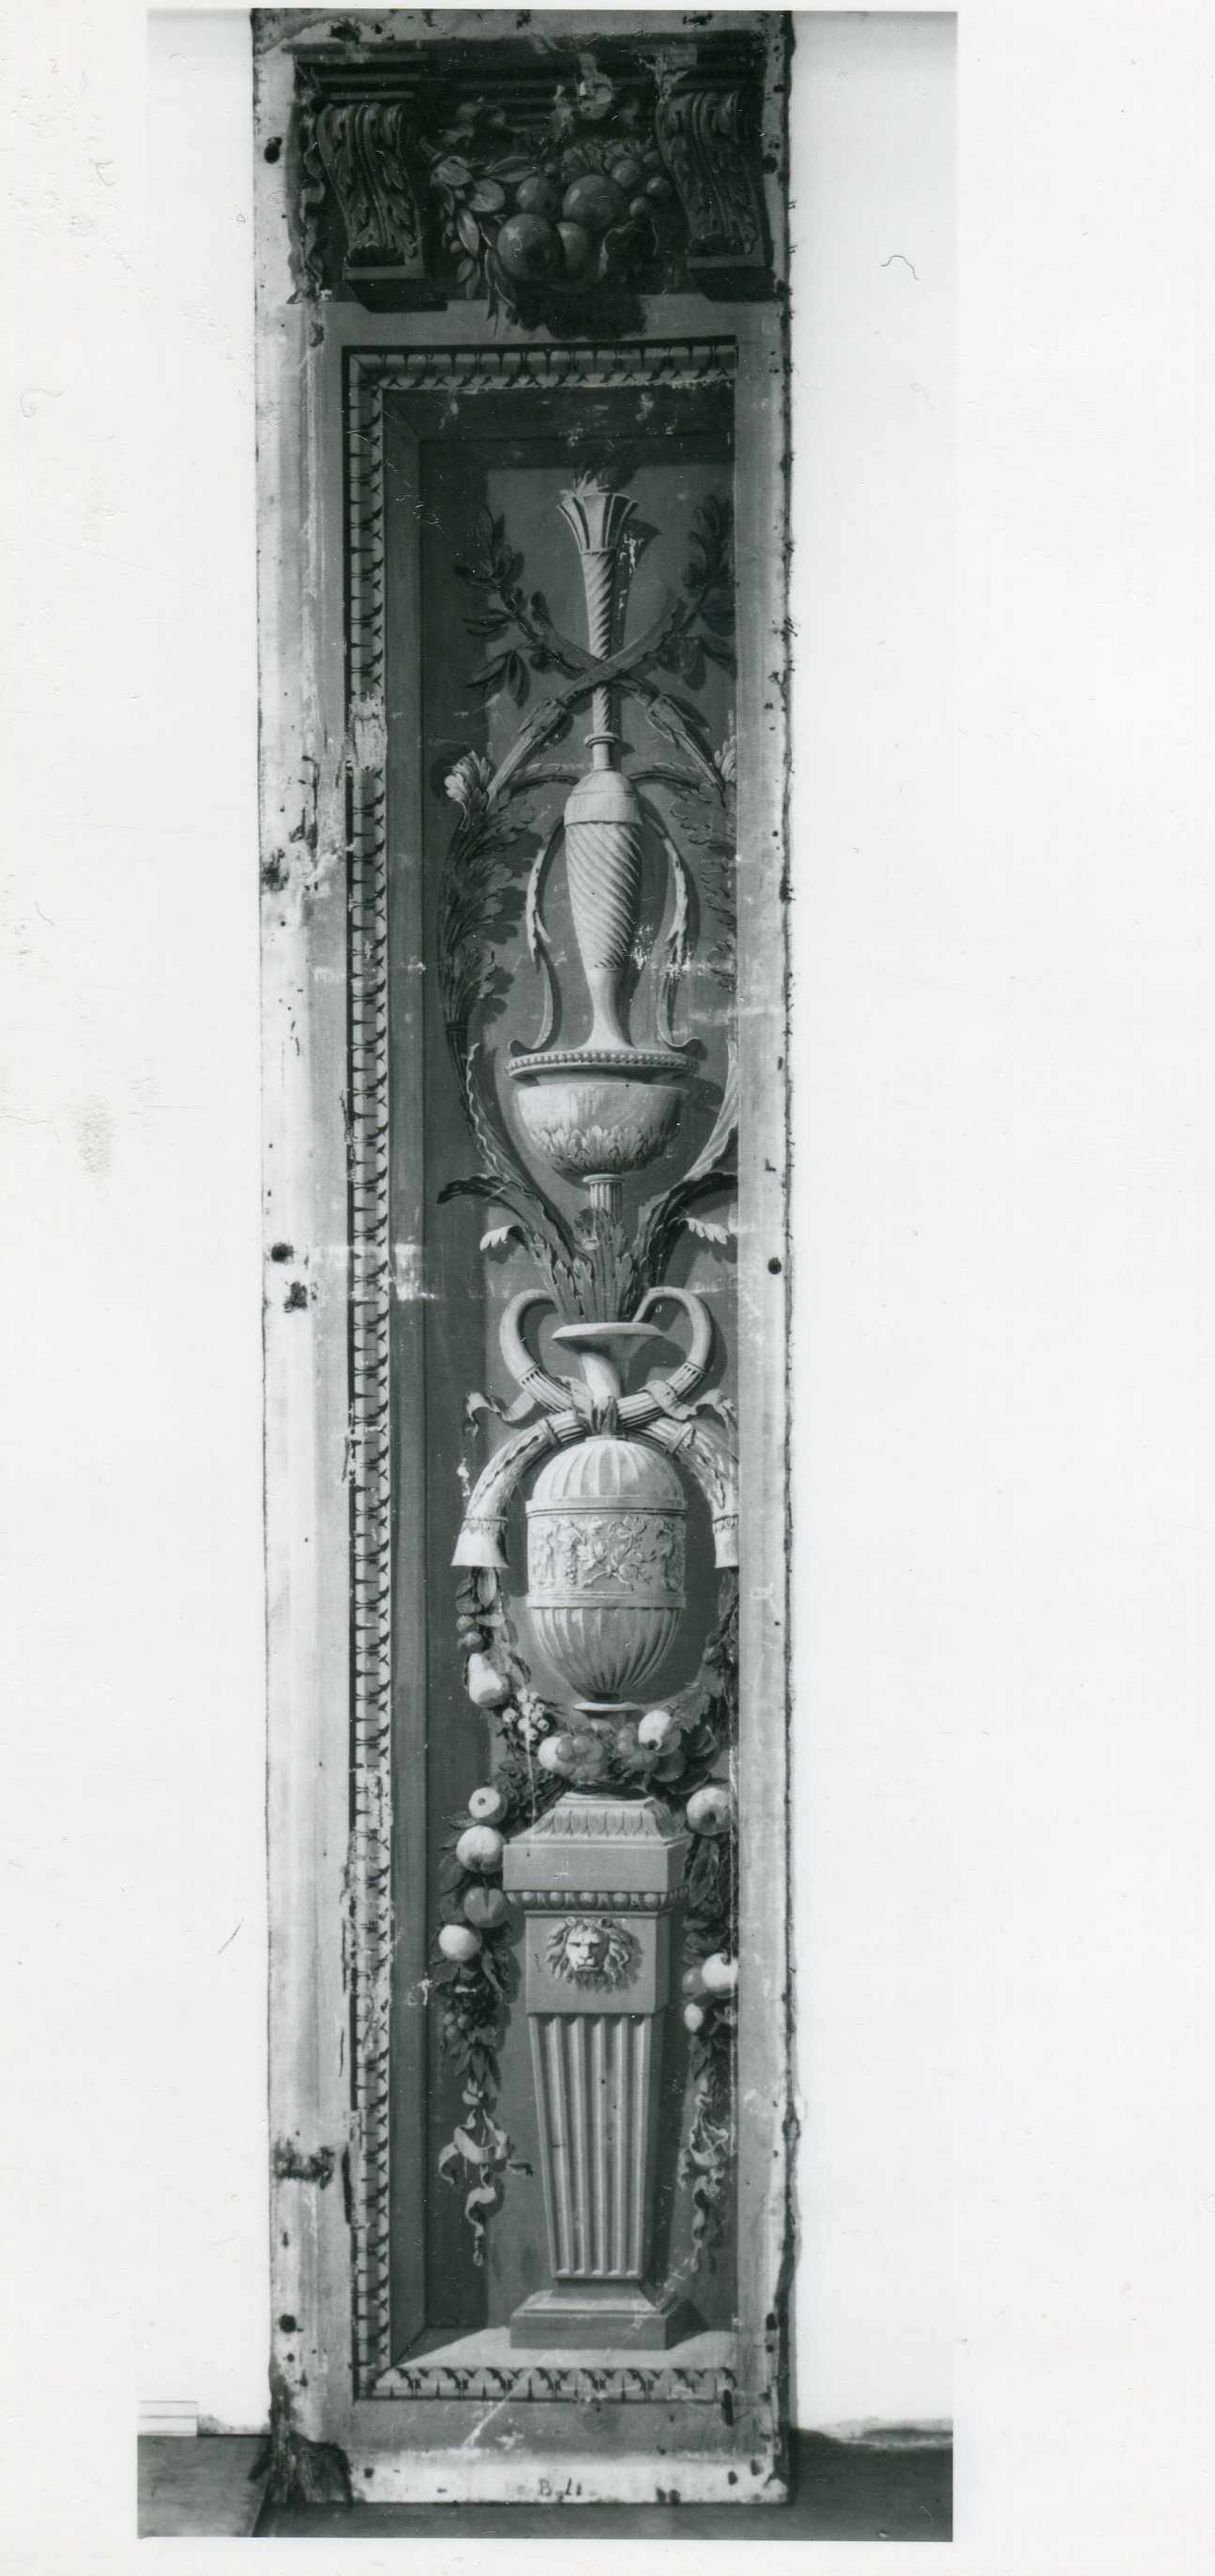 motivi decorativi a candelabra e vegetali (dipinto, elemento d'insieme) di Levati Giuseppe (sec. XVIII)